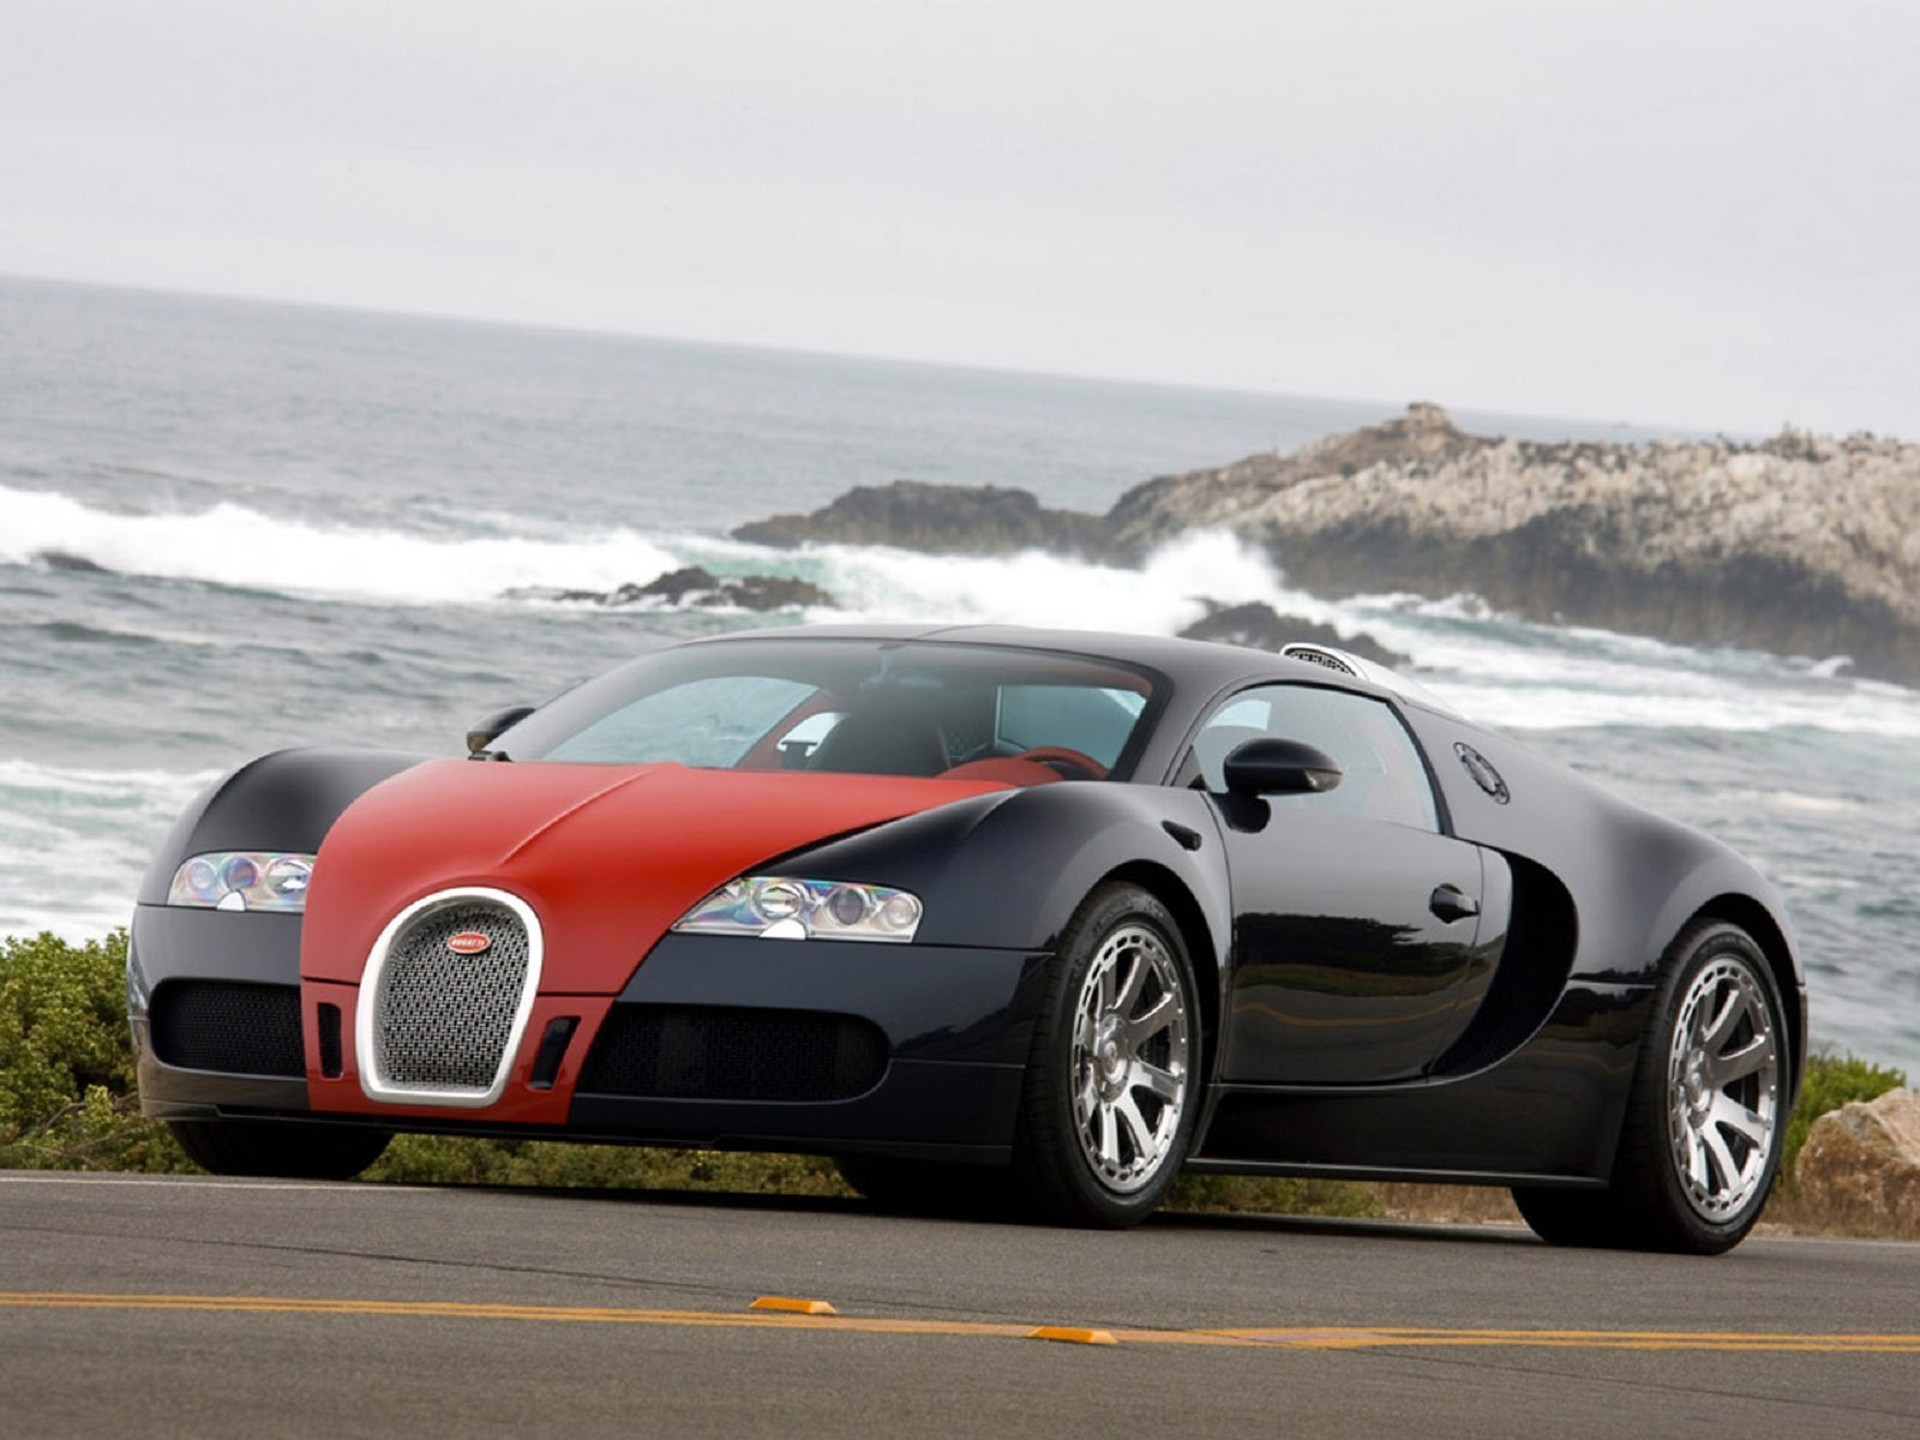 Bugatti Veyron Wallpaper Image Photos Pictures Background Audi